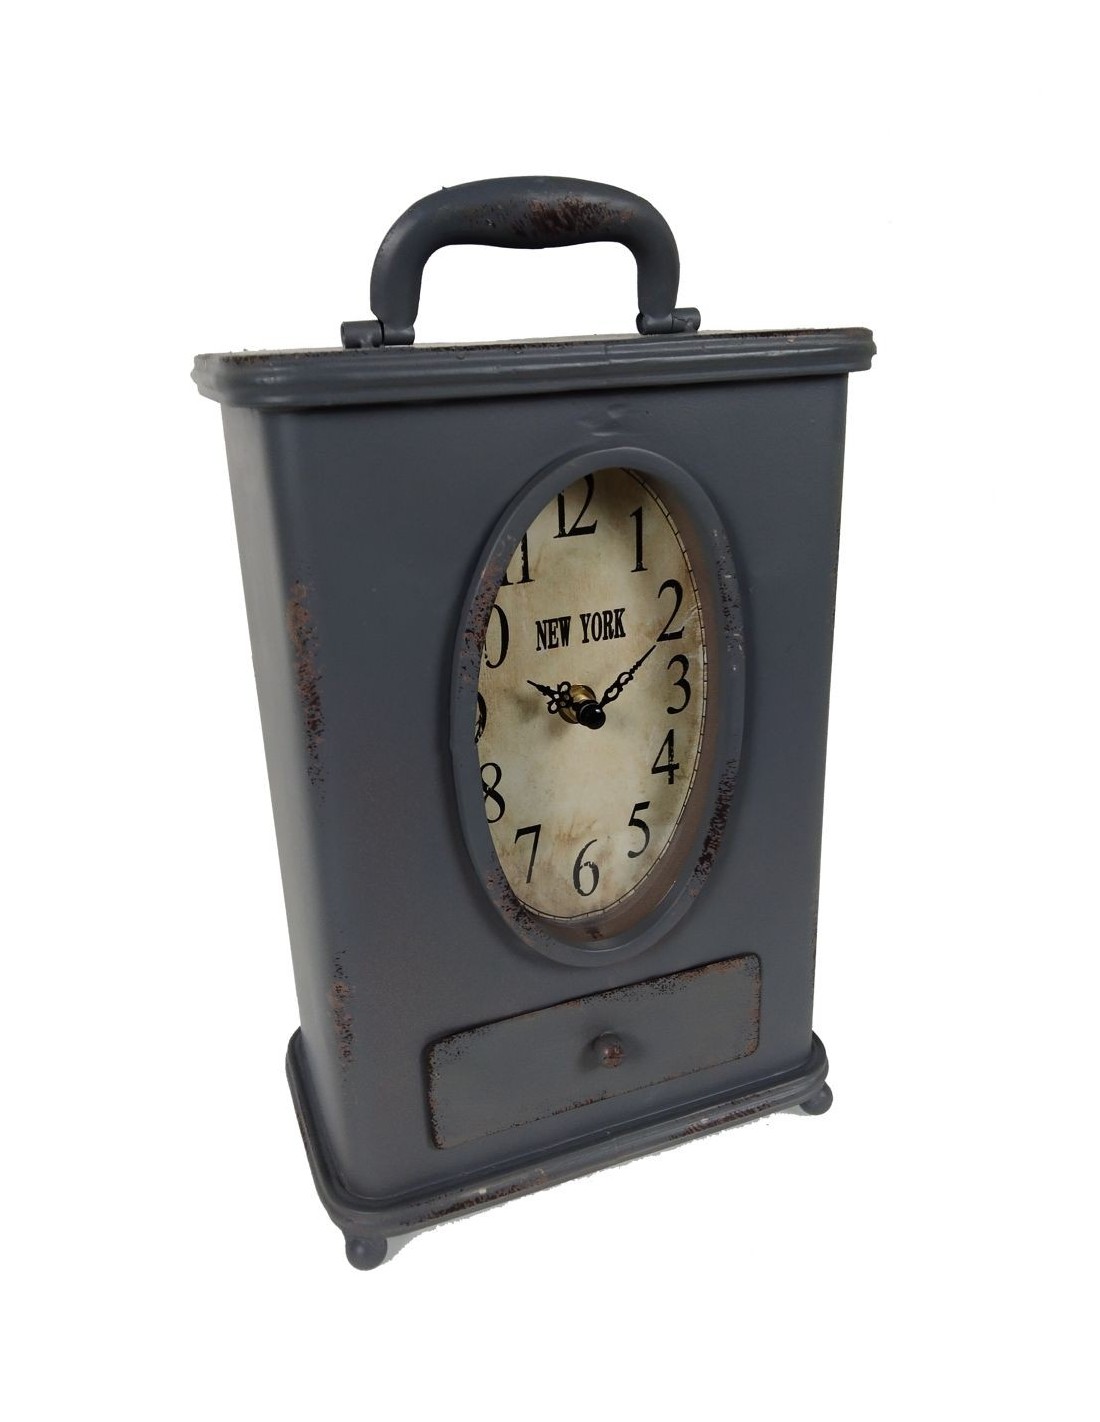  Reloj retro de caja metálica con esfera analógica a pilas